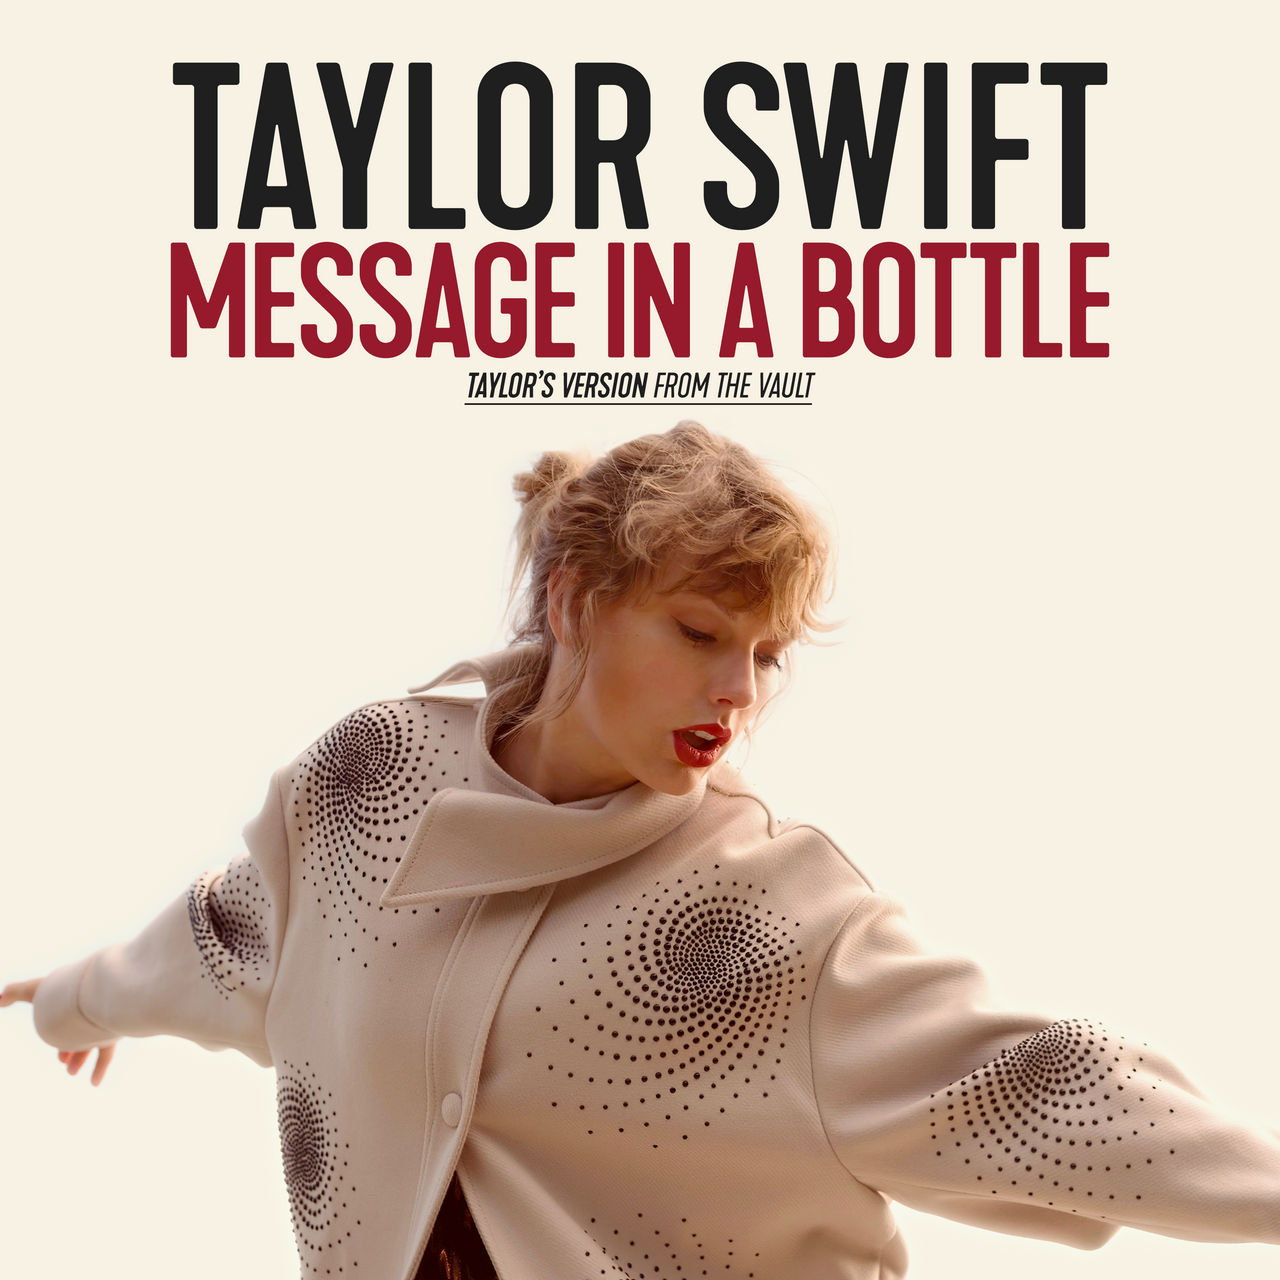 Taylor Swift Message In A Bottle by KallumLavigne on DeviantArt